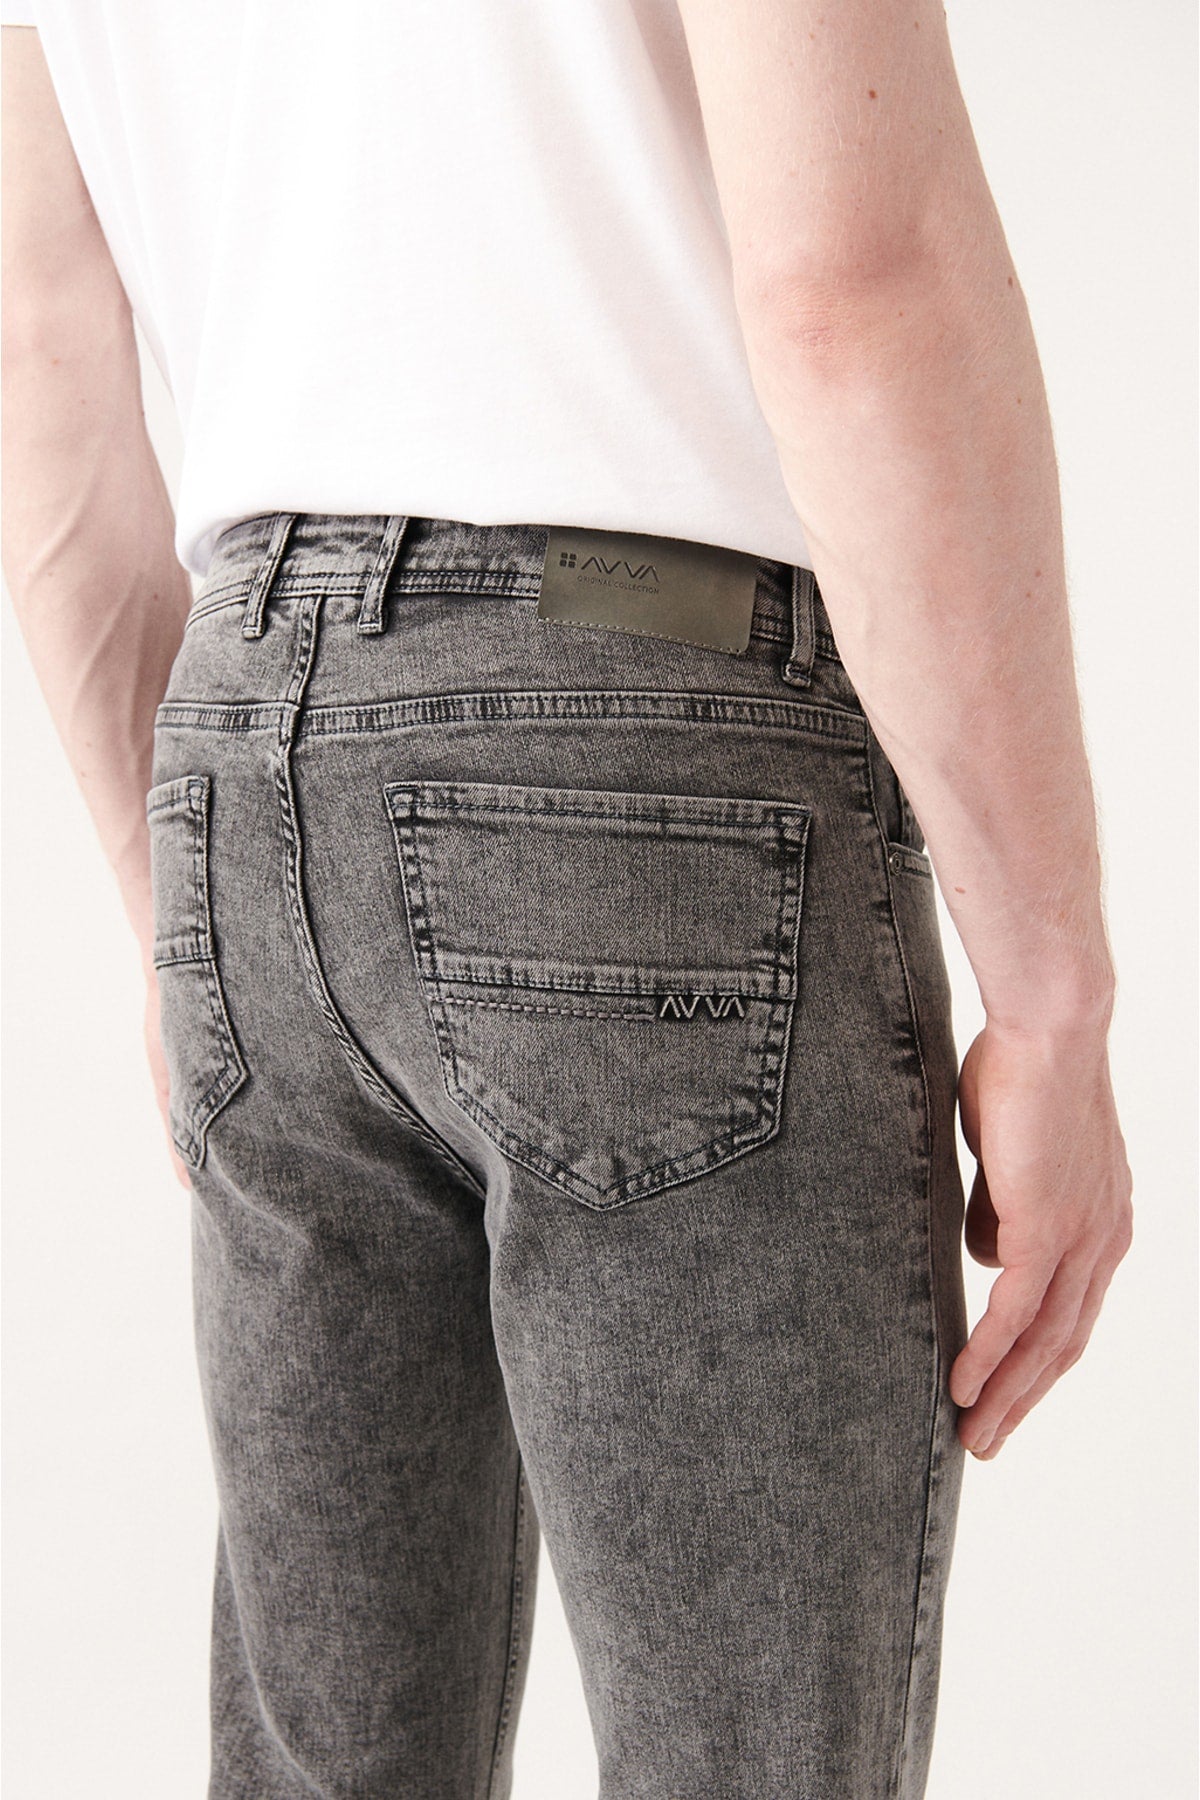 Men's black bleach washing lycra slim fit jean pants A31y3505